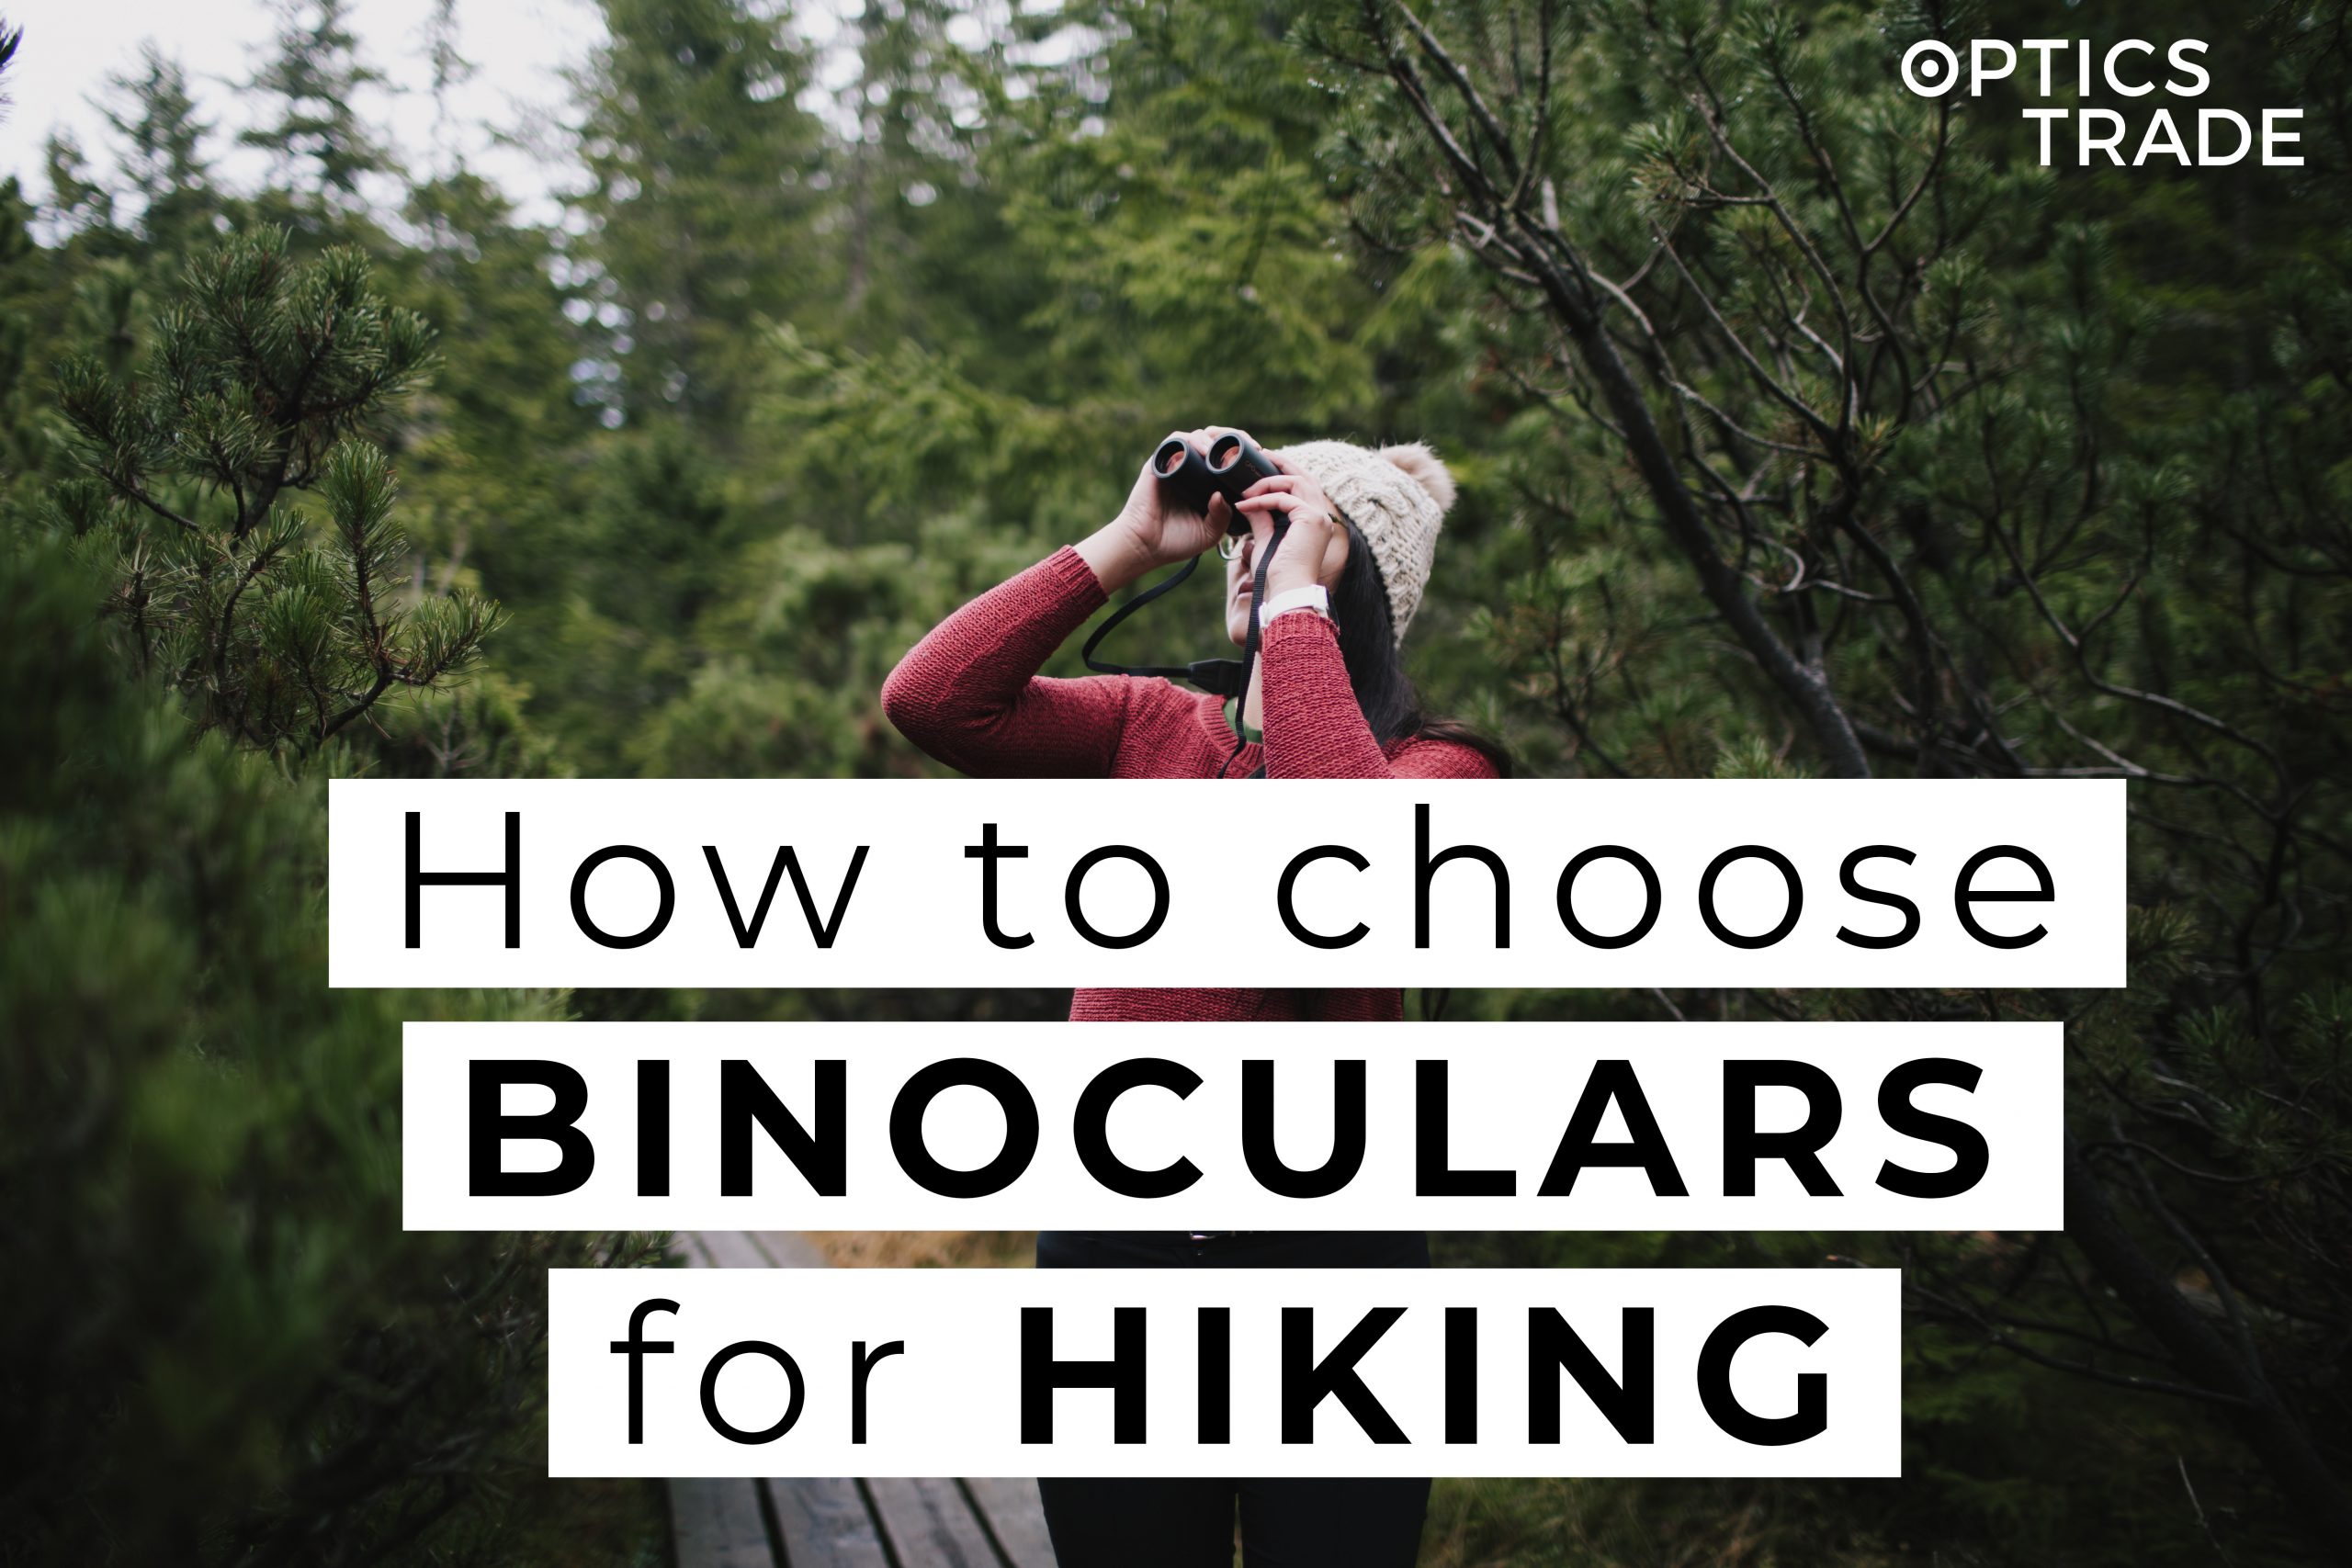 Hiking Binoculars - How to choose them?